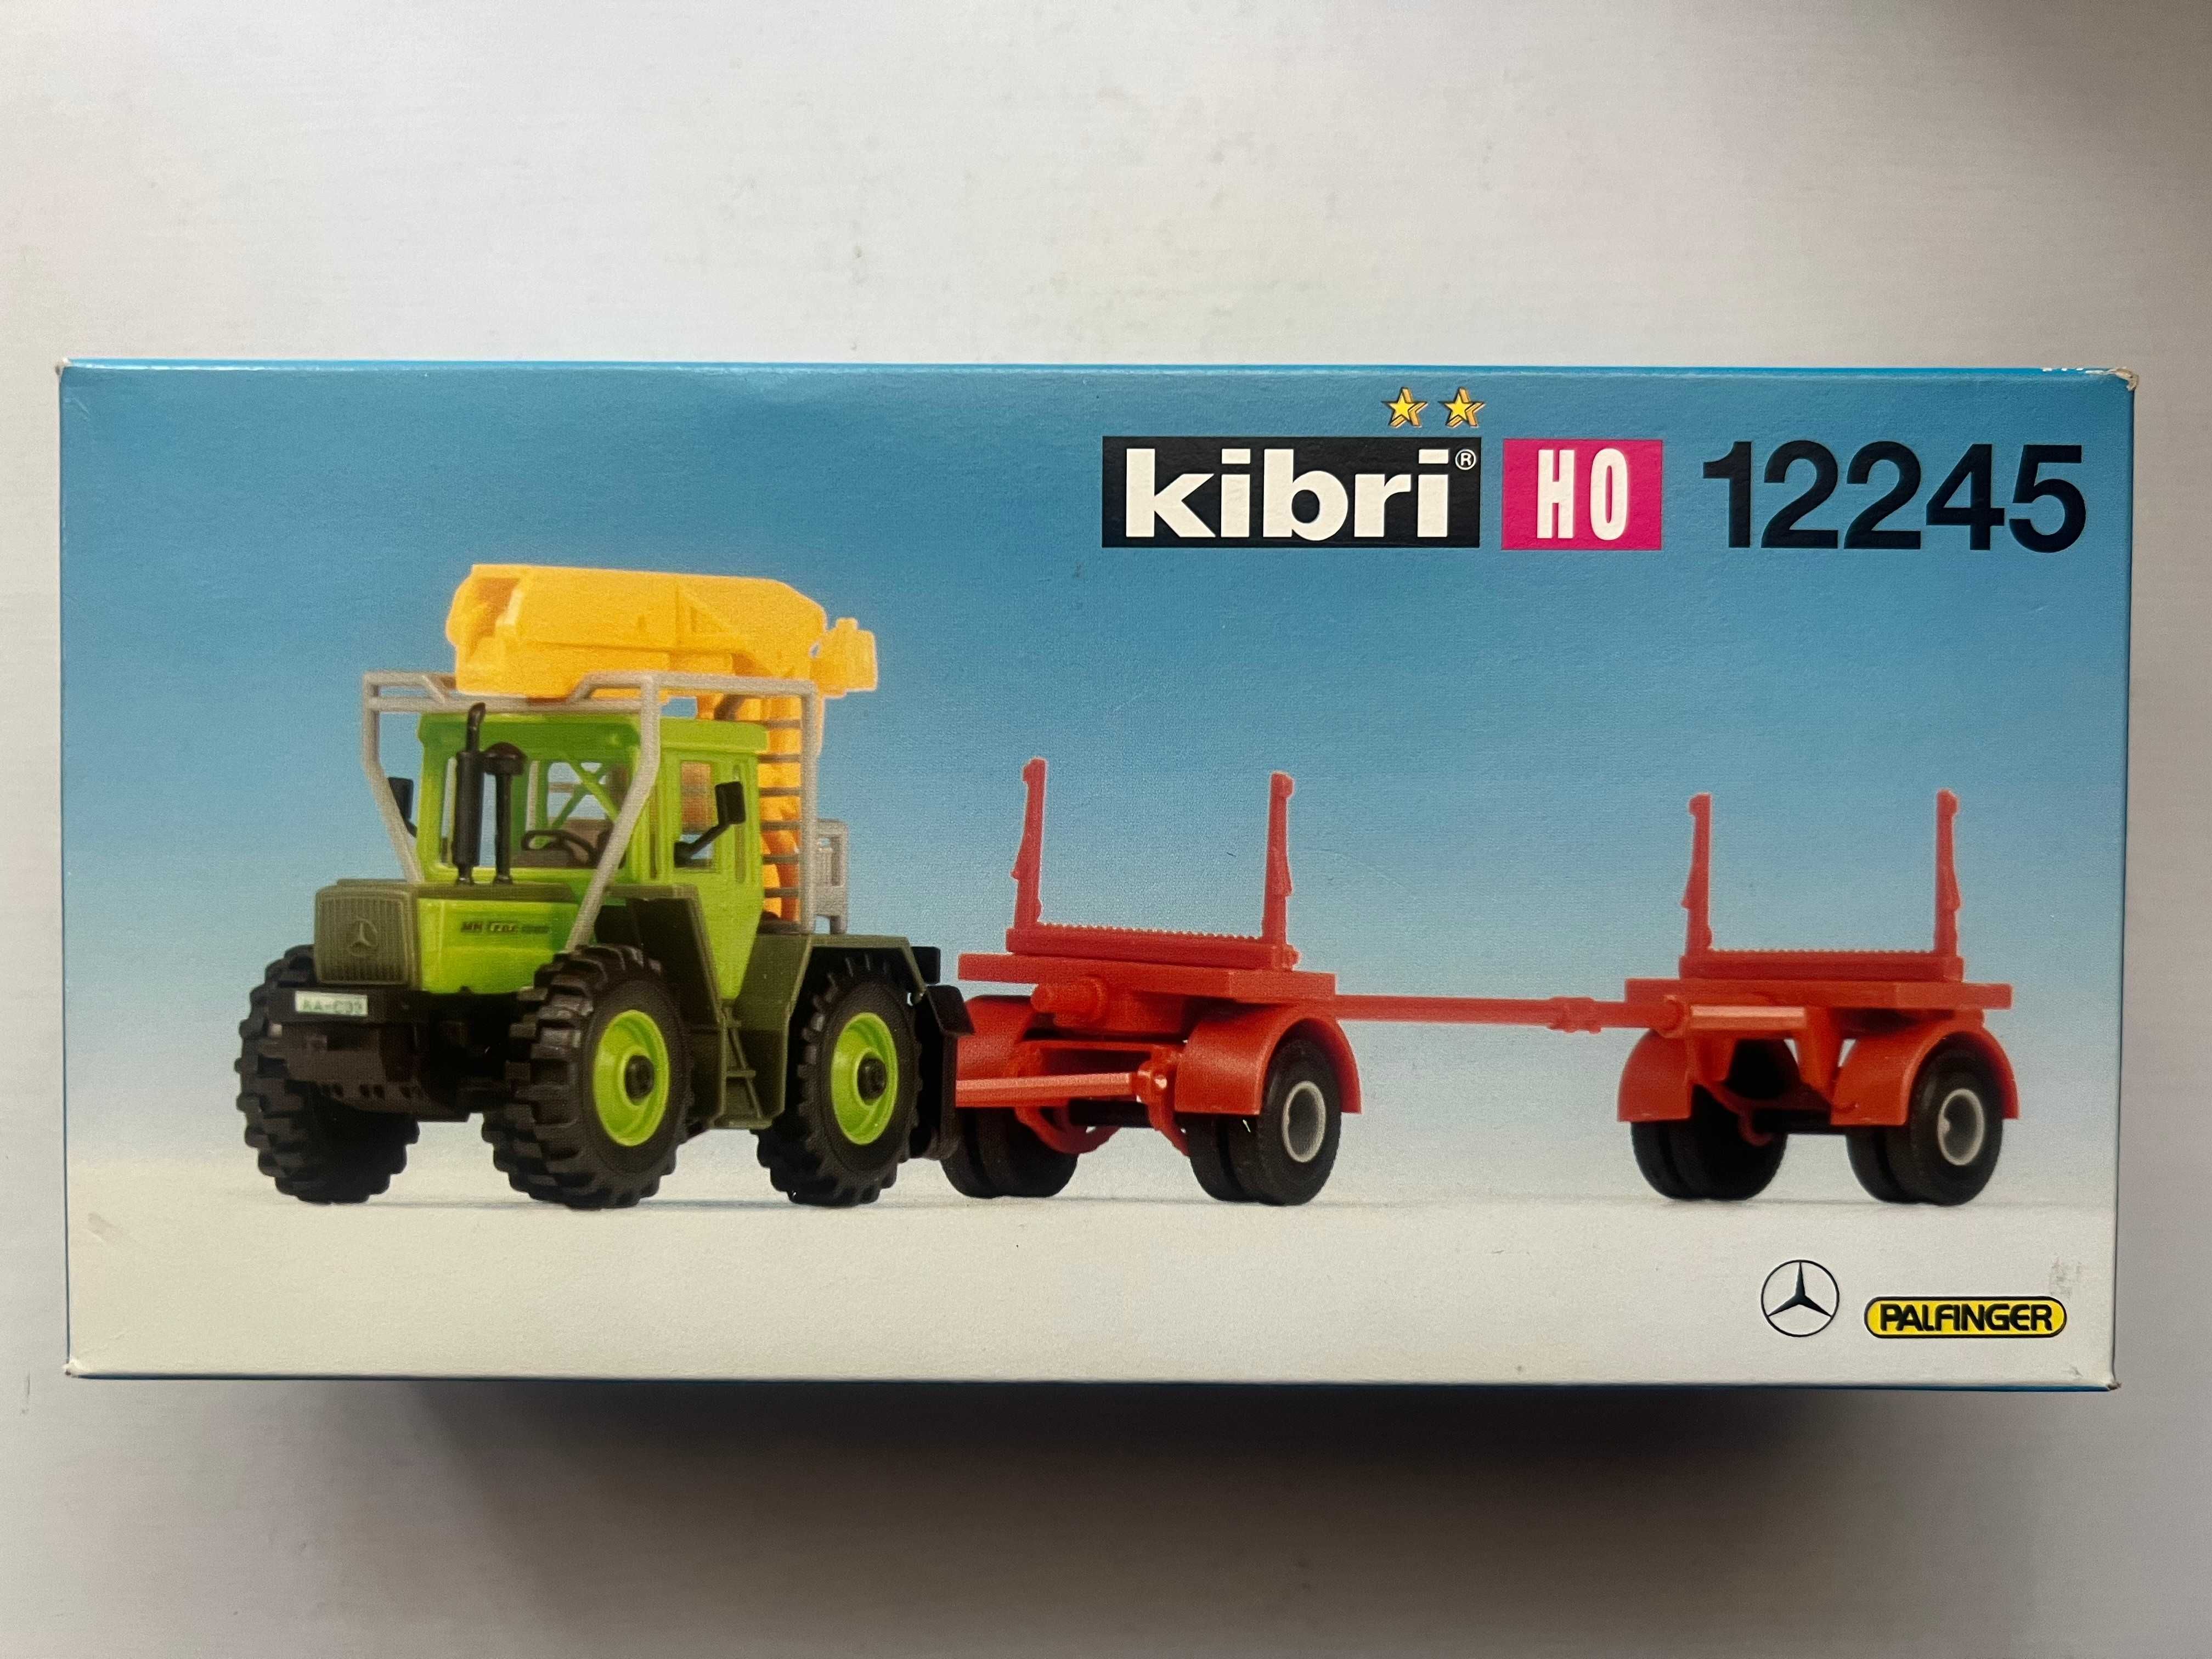 KIBRI 12245 MB Trator Carregador de Madeira, Escala H0 1/87, Ref. A001